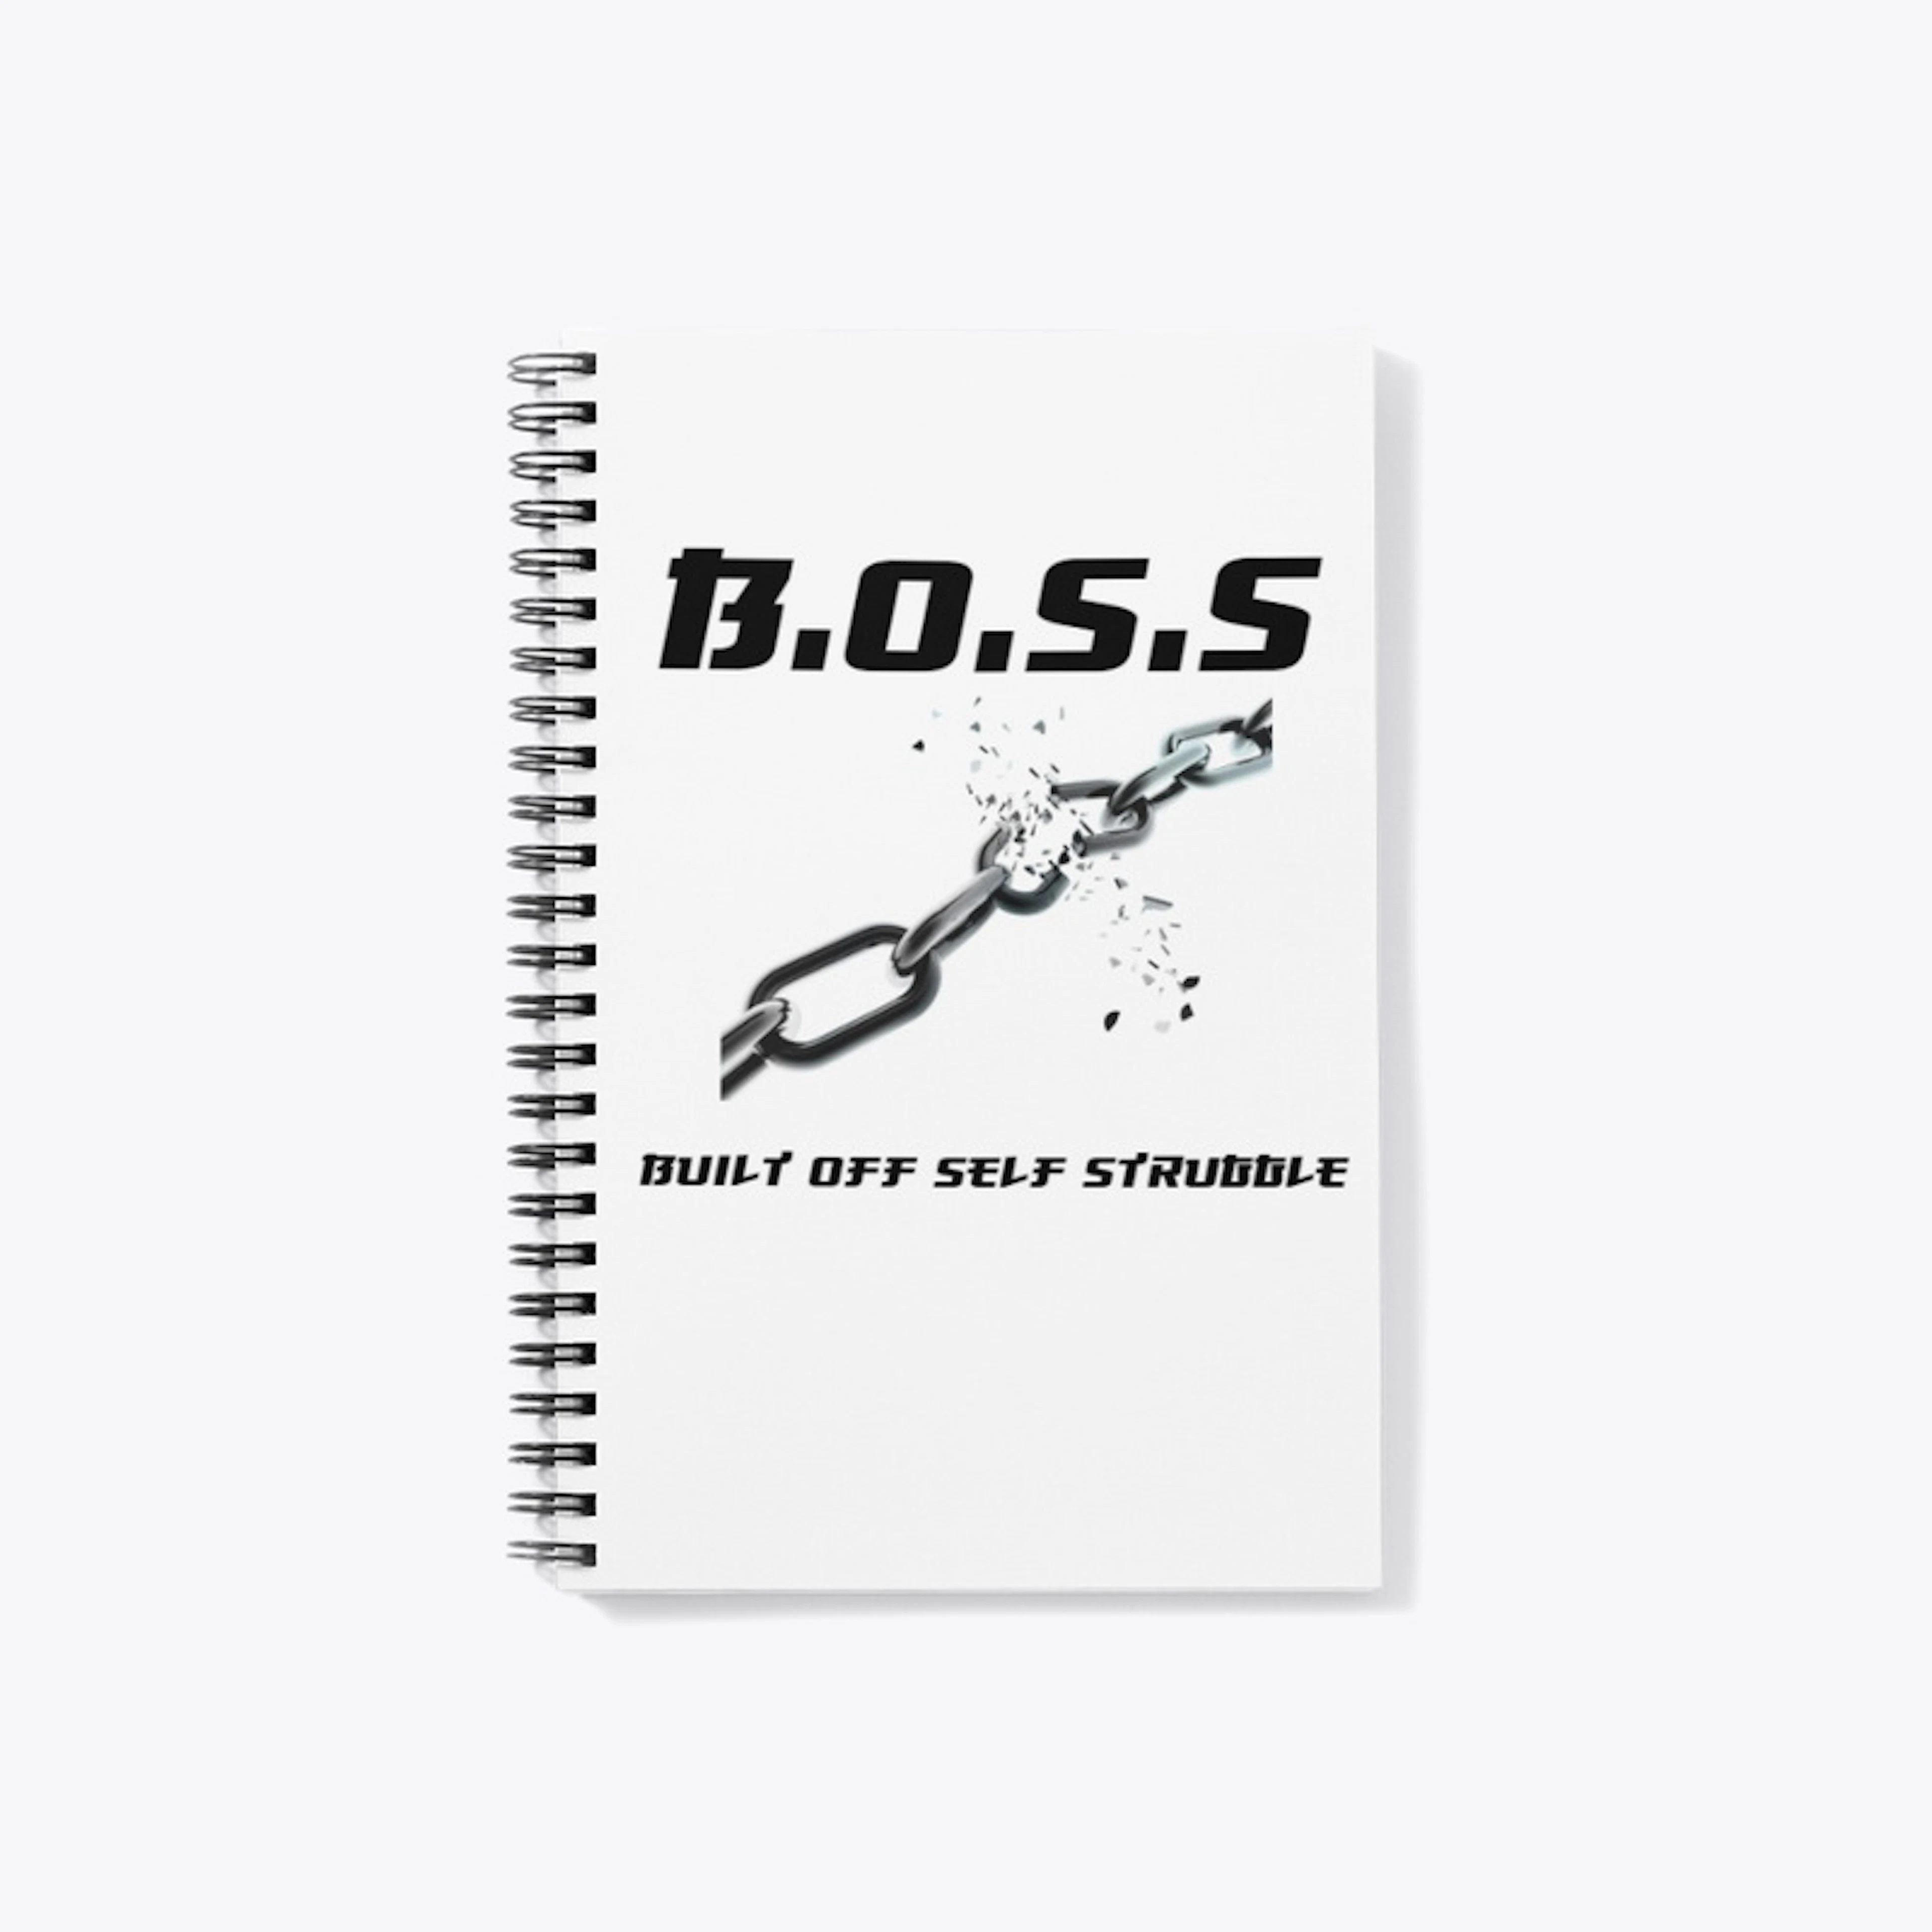 B.O.S.S (Built Off Self Struggle)